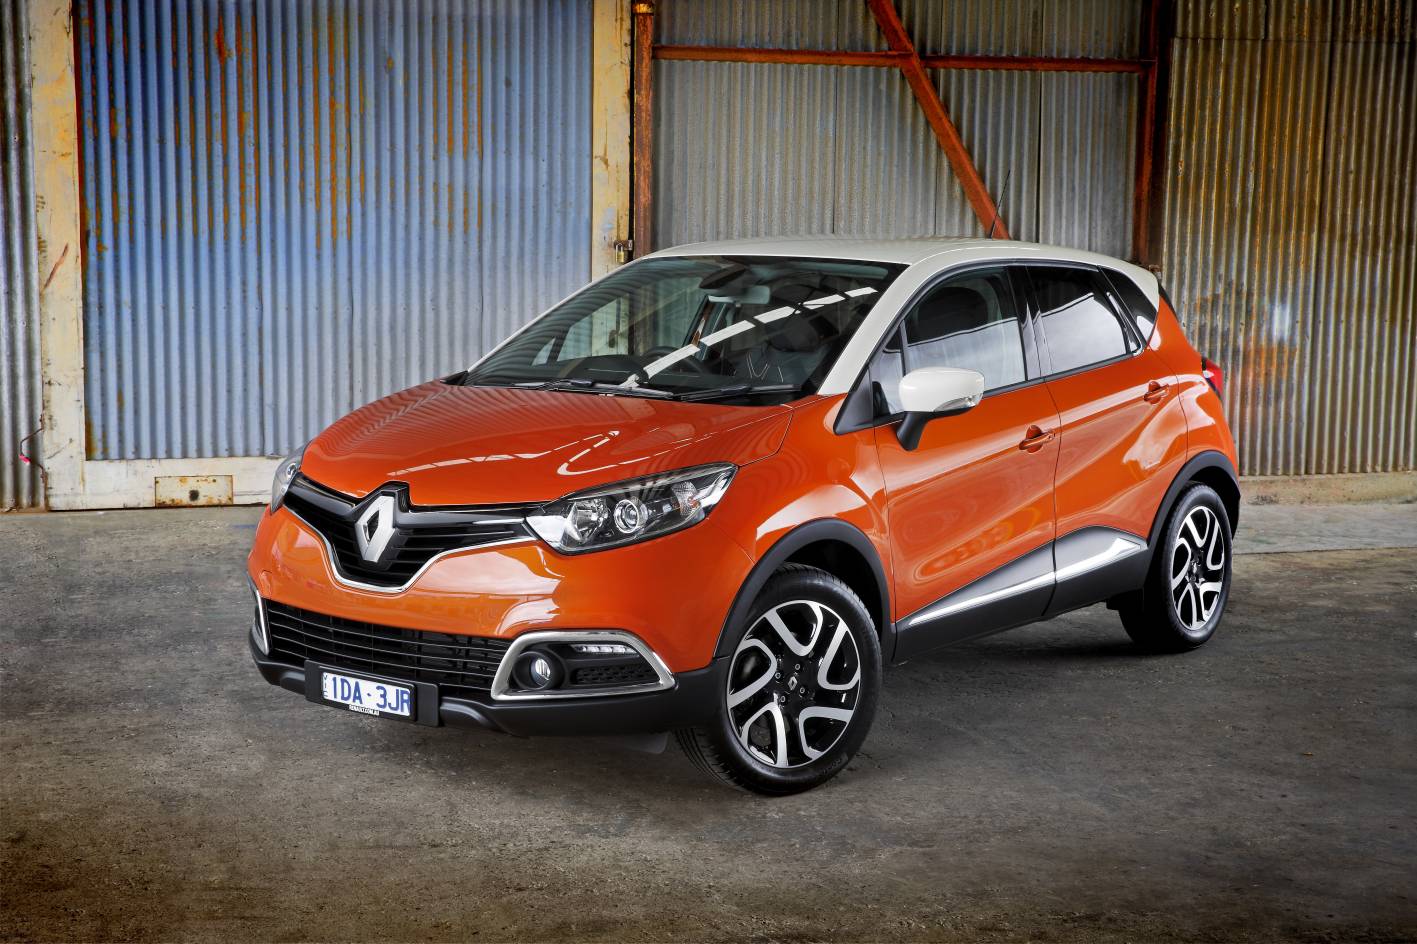 Renault Cars - News: Renault Captur small SUV on sale now ...